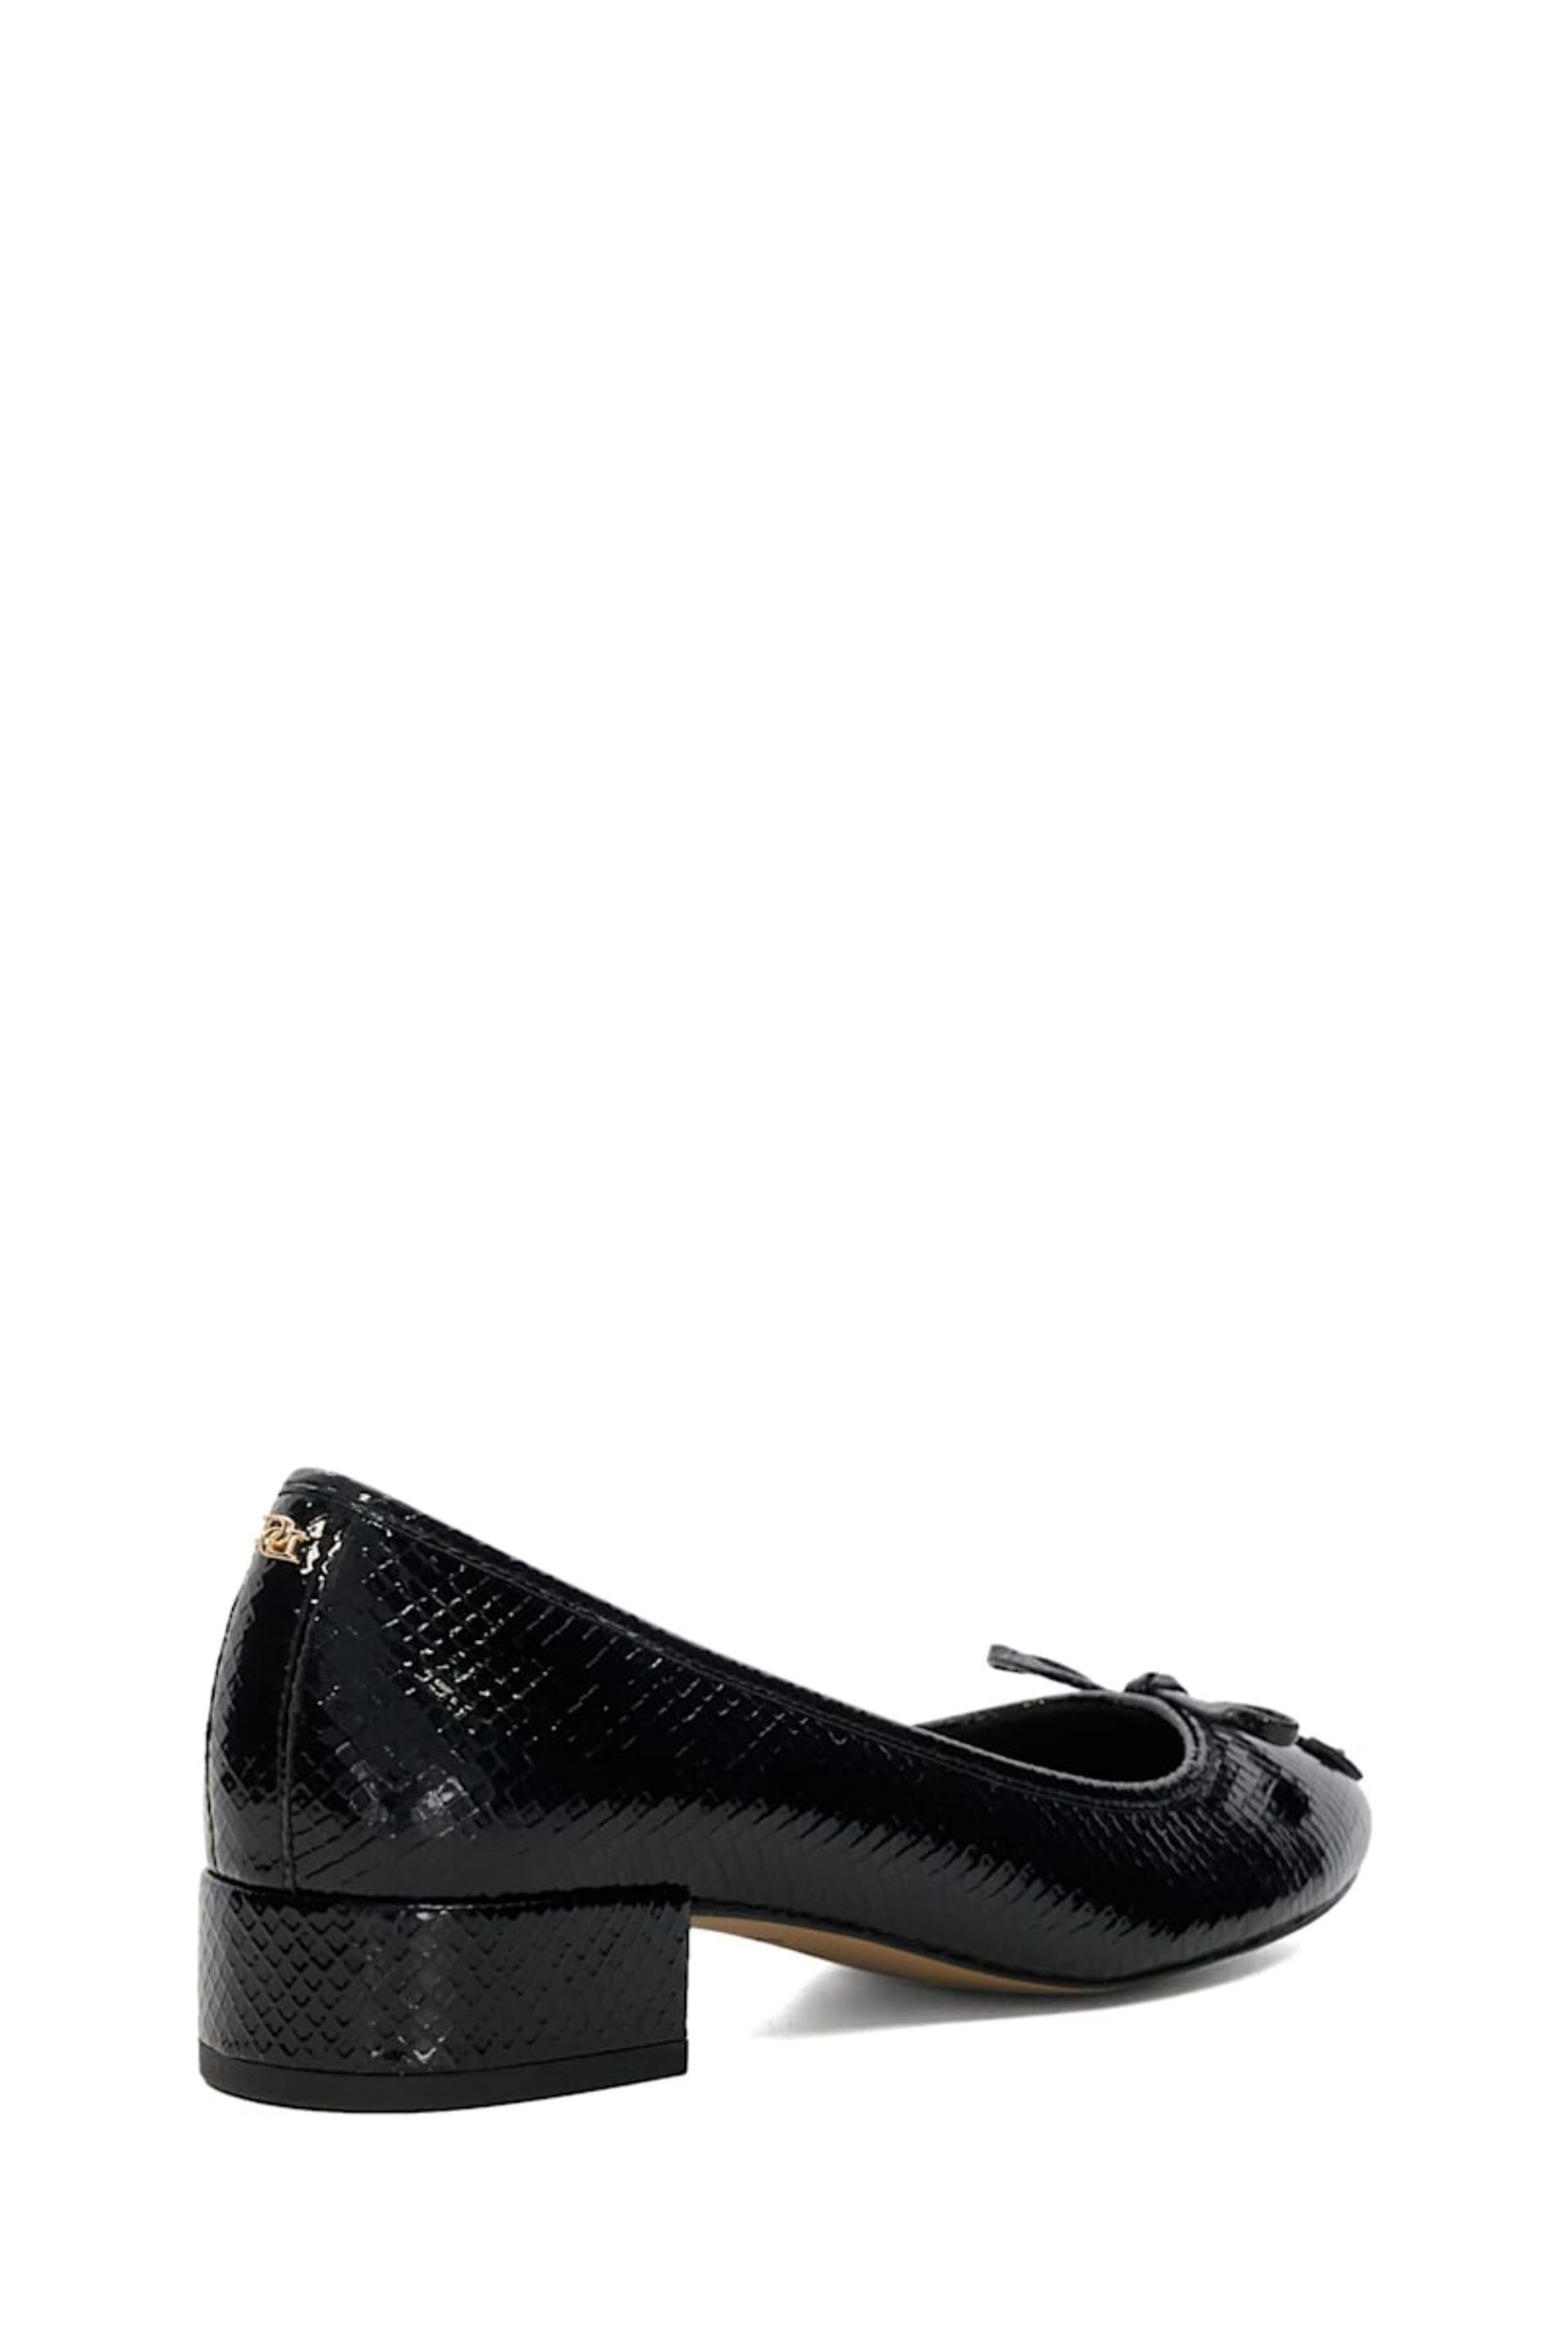 Dune London Black Chrome Block Heel Hollies Ballerina Shoes - Image 6 of 8